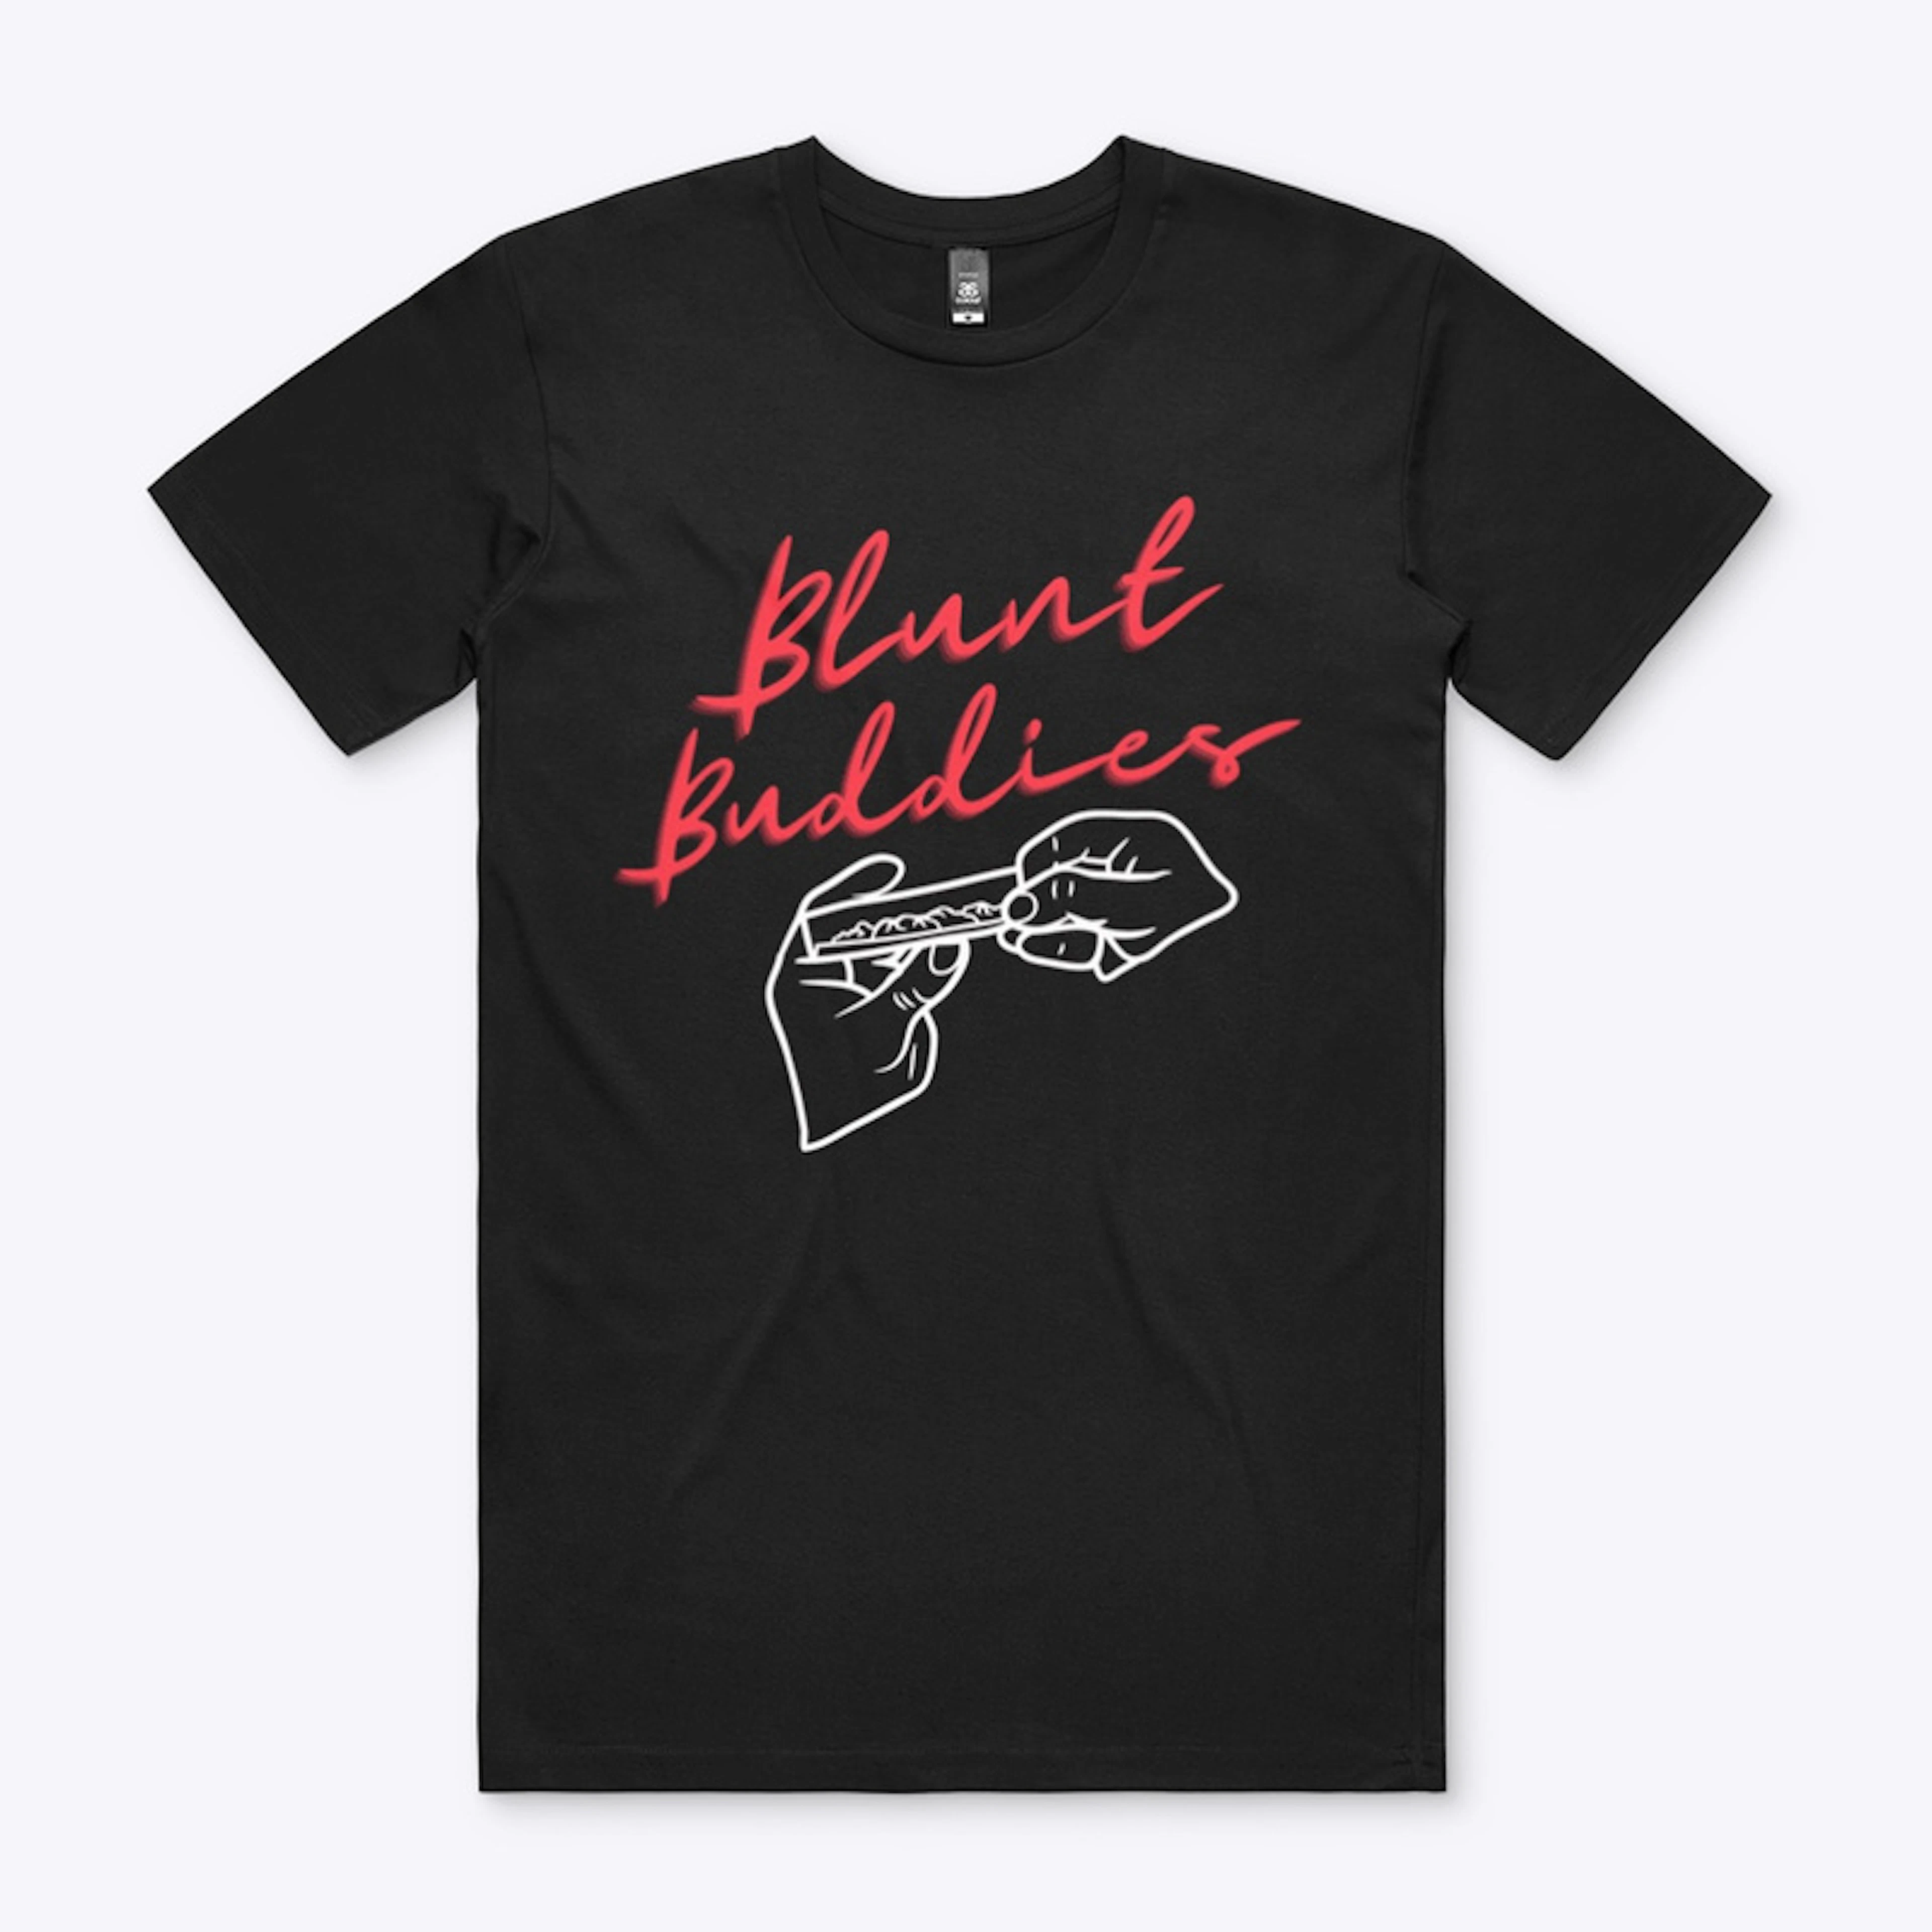 Blunt Buddies T-shirt 